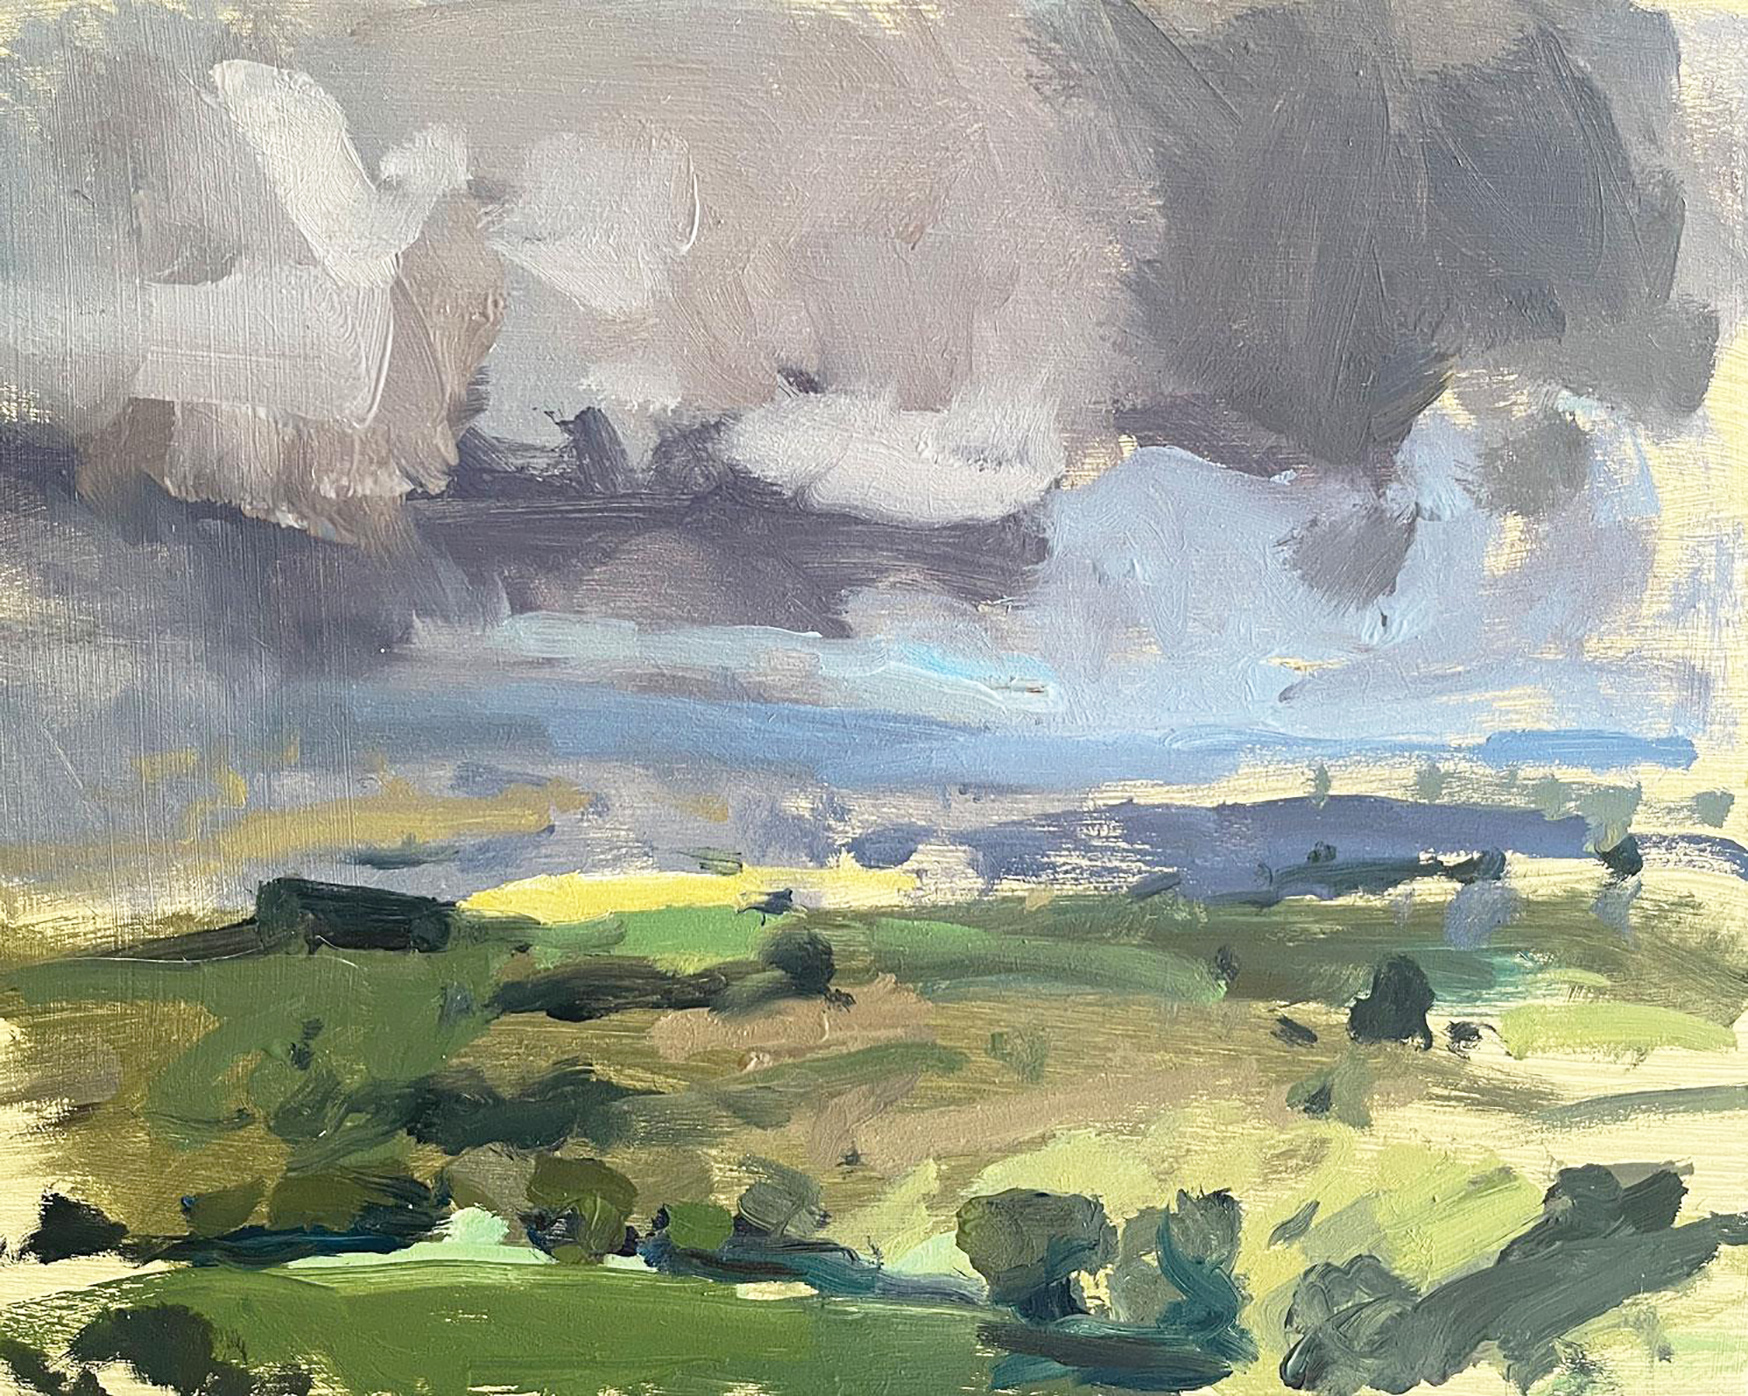 Rain Cloud from Exmoor by Sarah Manolescue